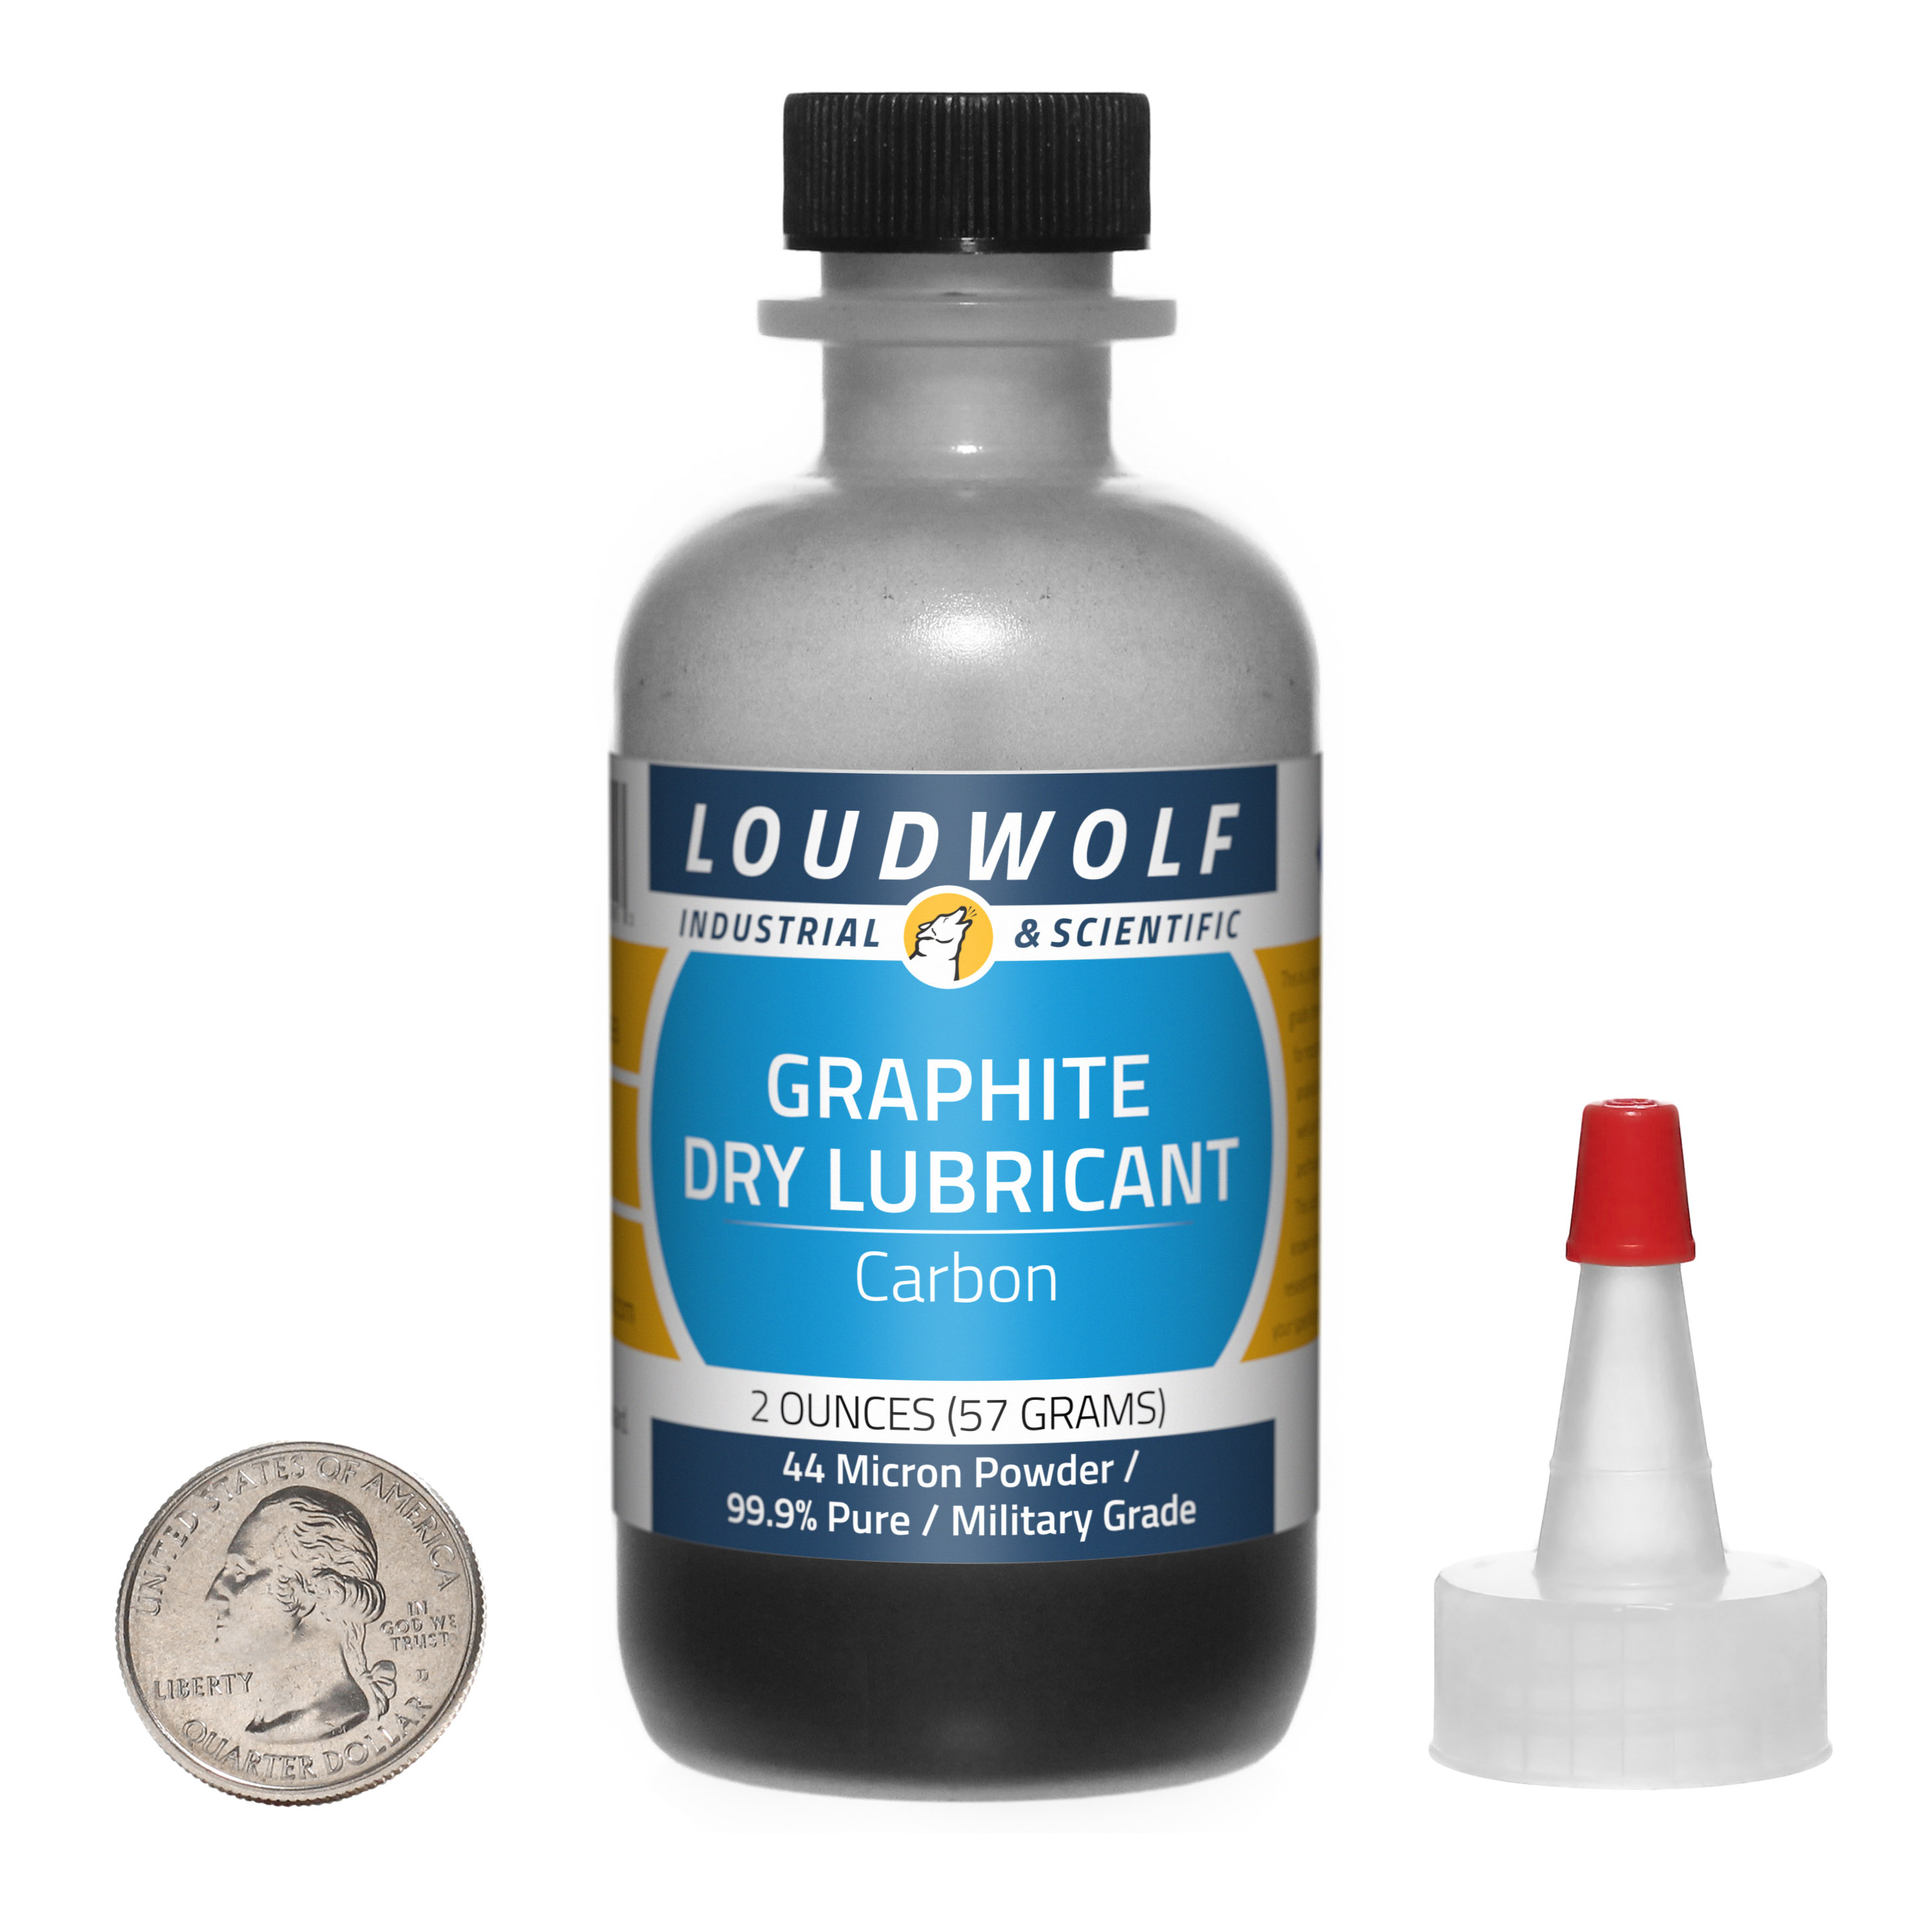 Graphite / 2 Ounce Bottle / 99.9% Pure Military Grade / 44 Micron Powder / USA Loudwolf Industrial & Scientific LW-CARBON-2/1